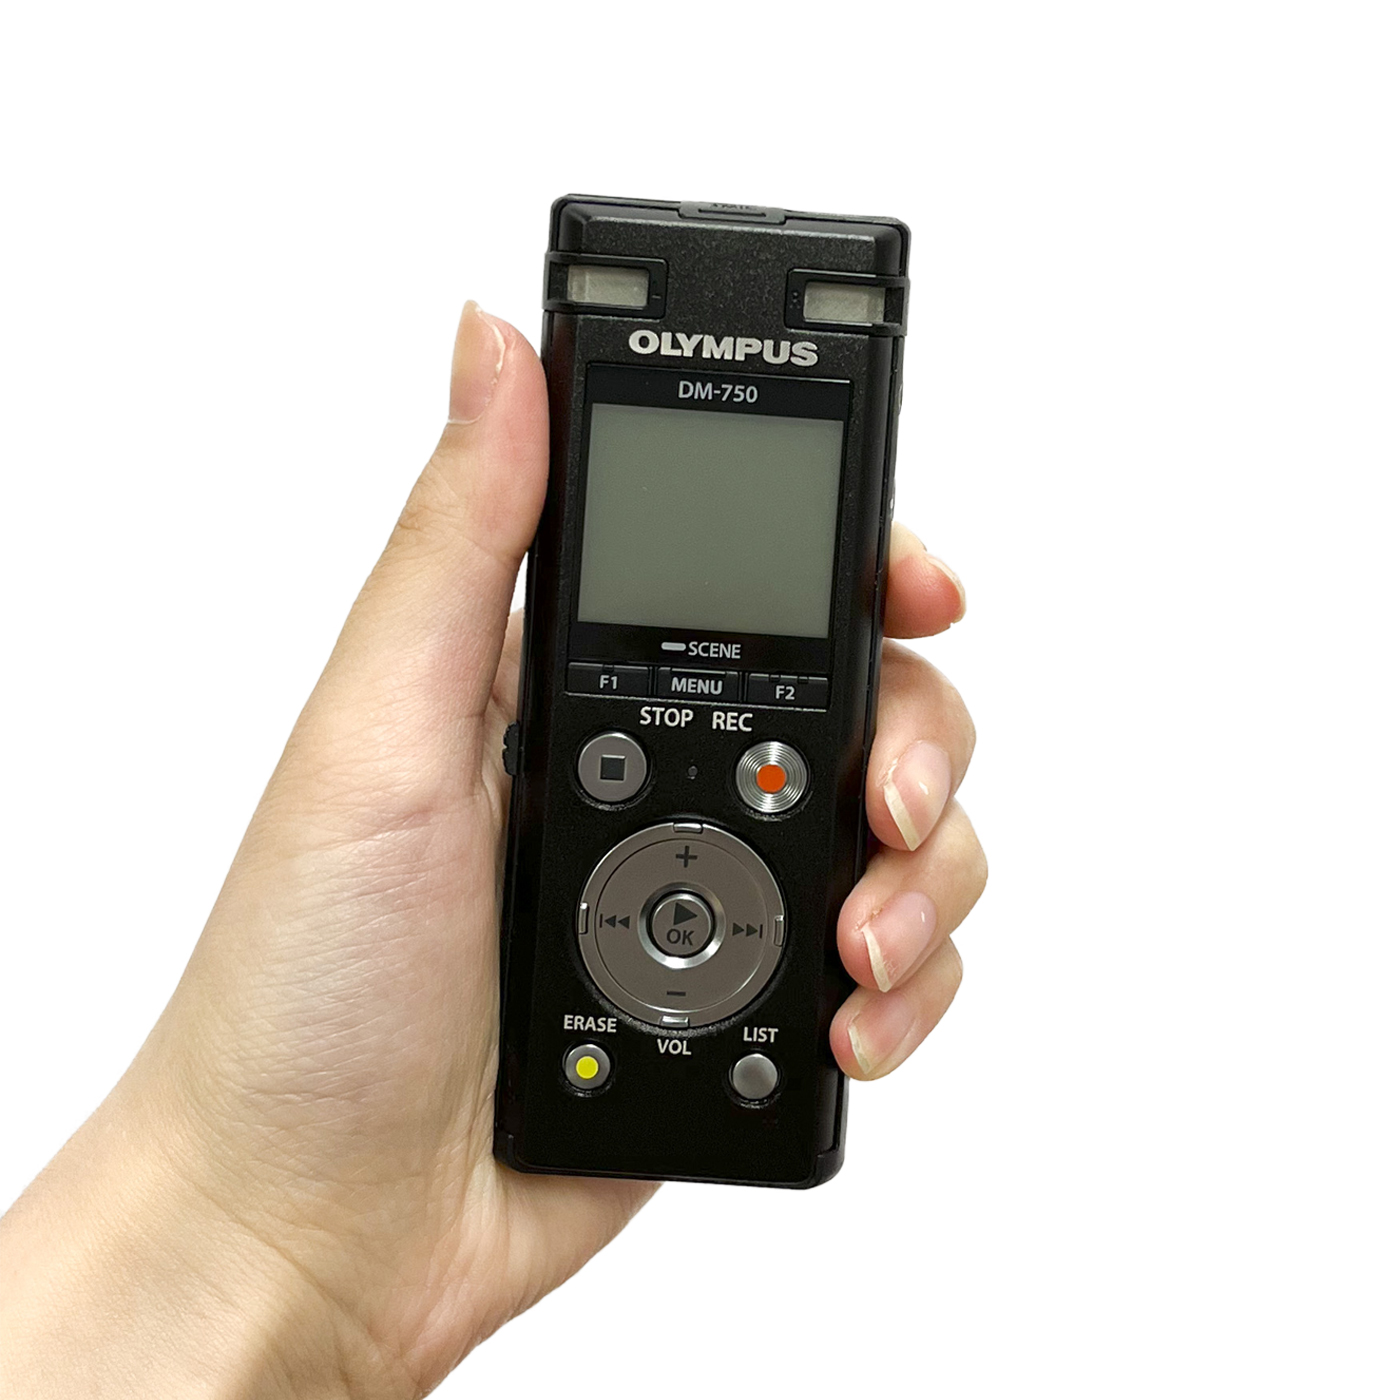 OLYMPUS ICレコーダー VoiceTrek DM-750 BLK 内蔵メモリー4GB MicroSD 議事録 会議録 良質